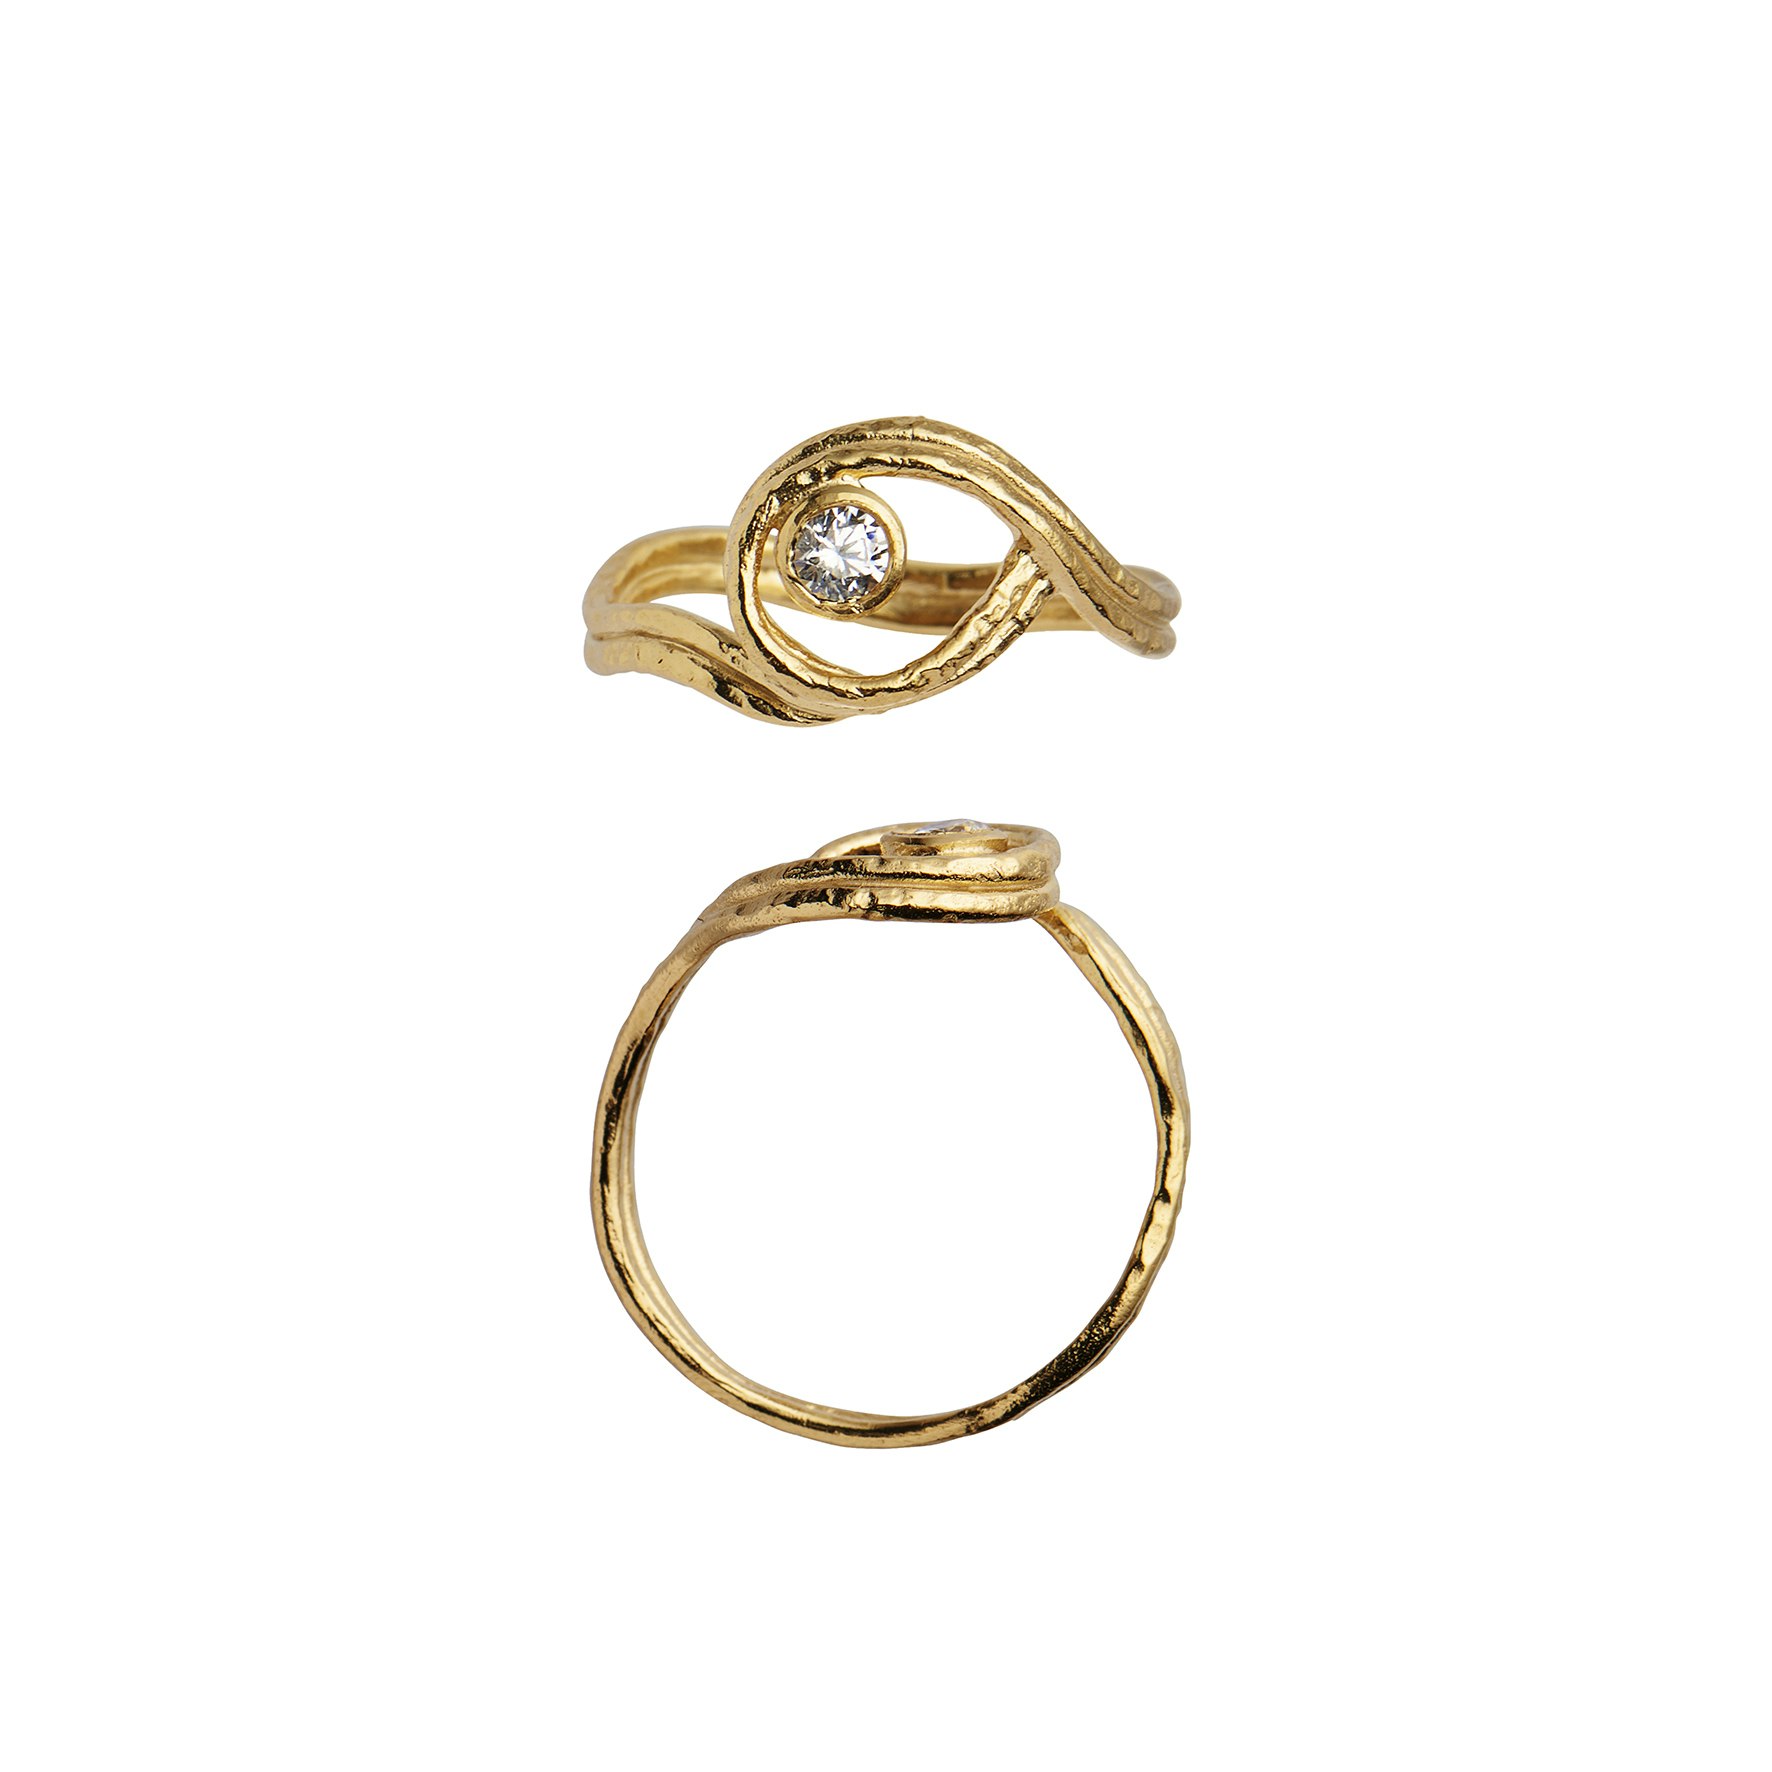 Balance Ring With Stone från STINE A Jewelry i Förgyllt-Silver Sterling 925